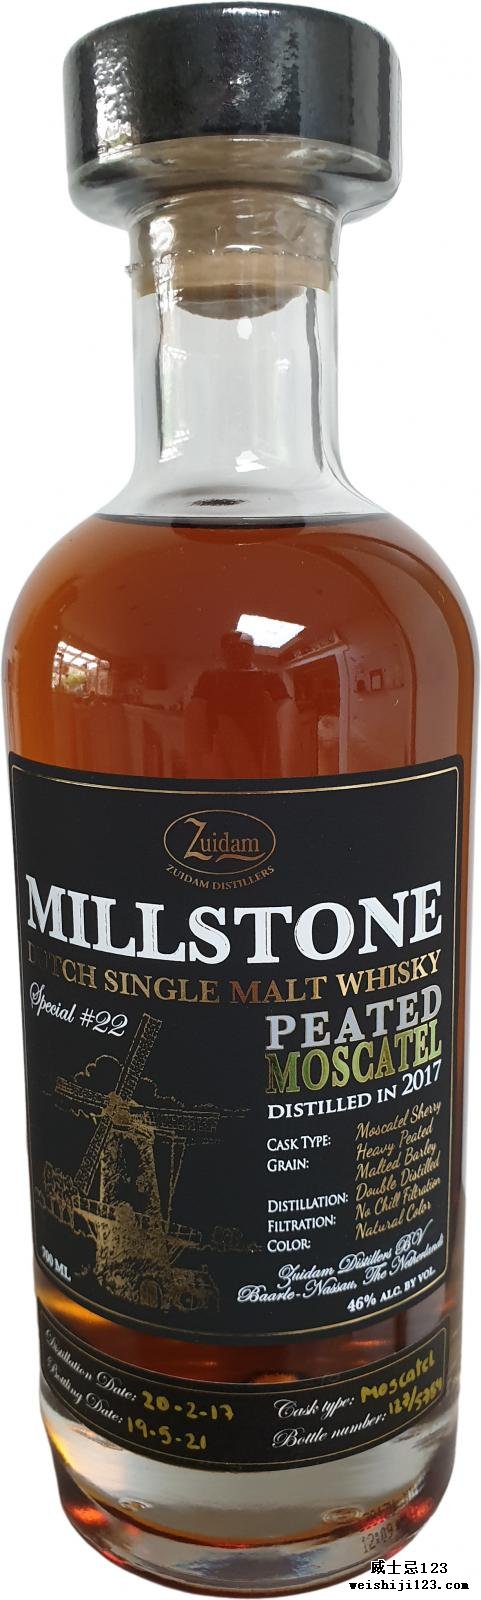 Millstone 2017